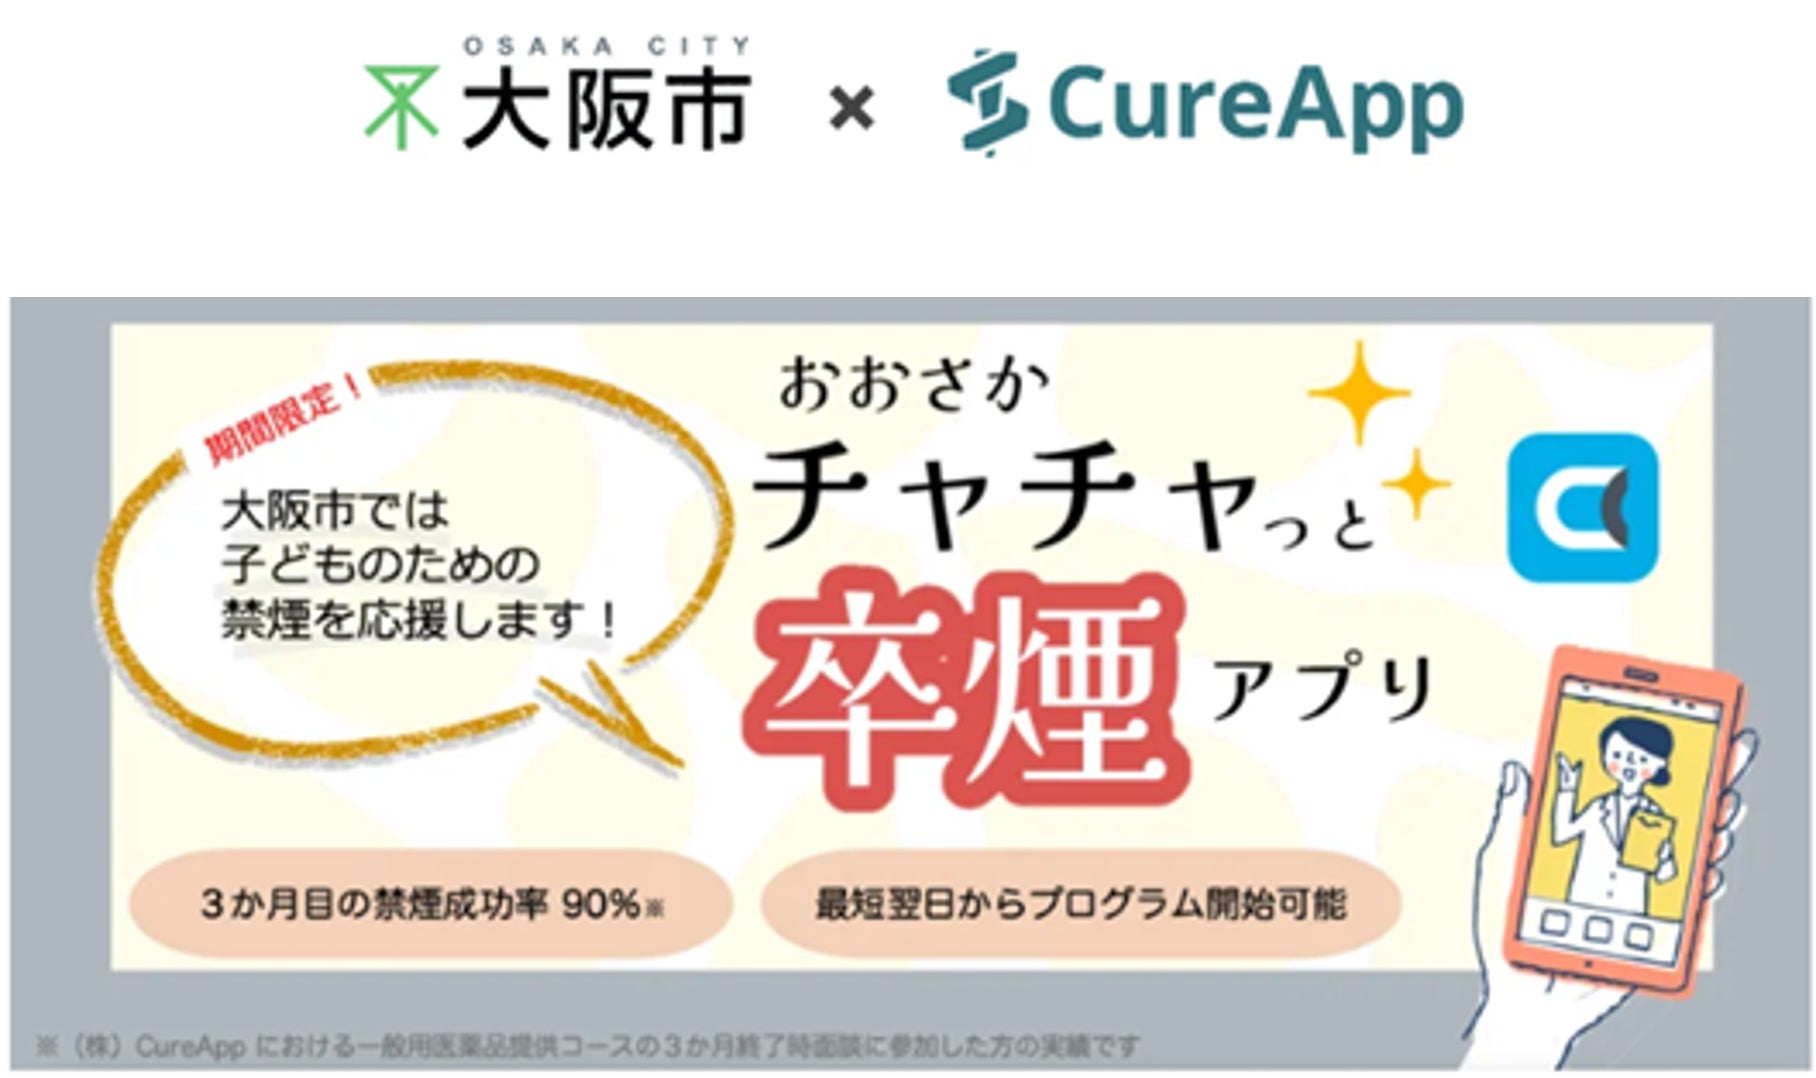 CureAppのオンライン禁煙プログラム「ascure卒煙」導入から半年大阪市の禁煙支援事業「おおさかチャチャっと卒煙」進捗レポート～5月31日は世界禁煙デー～　禁煙デーに向けた啓発イベントも開催！